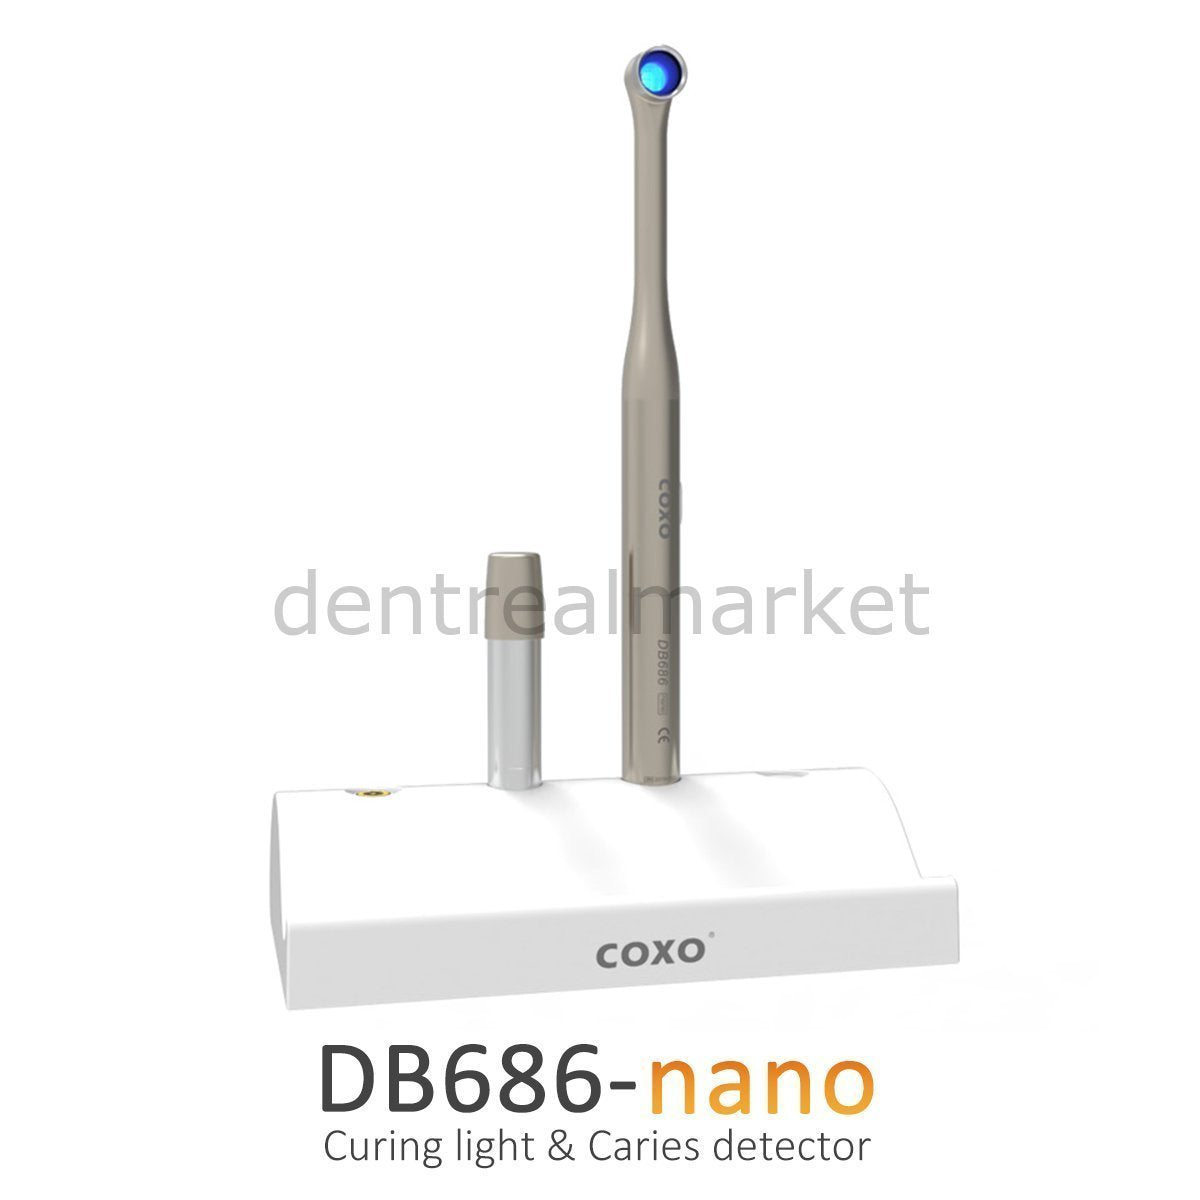 DentrealStore - Coxo Nano Polymerization Device - Metal Body